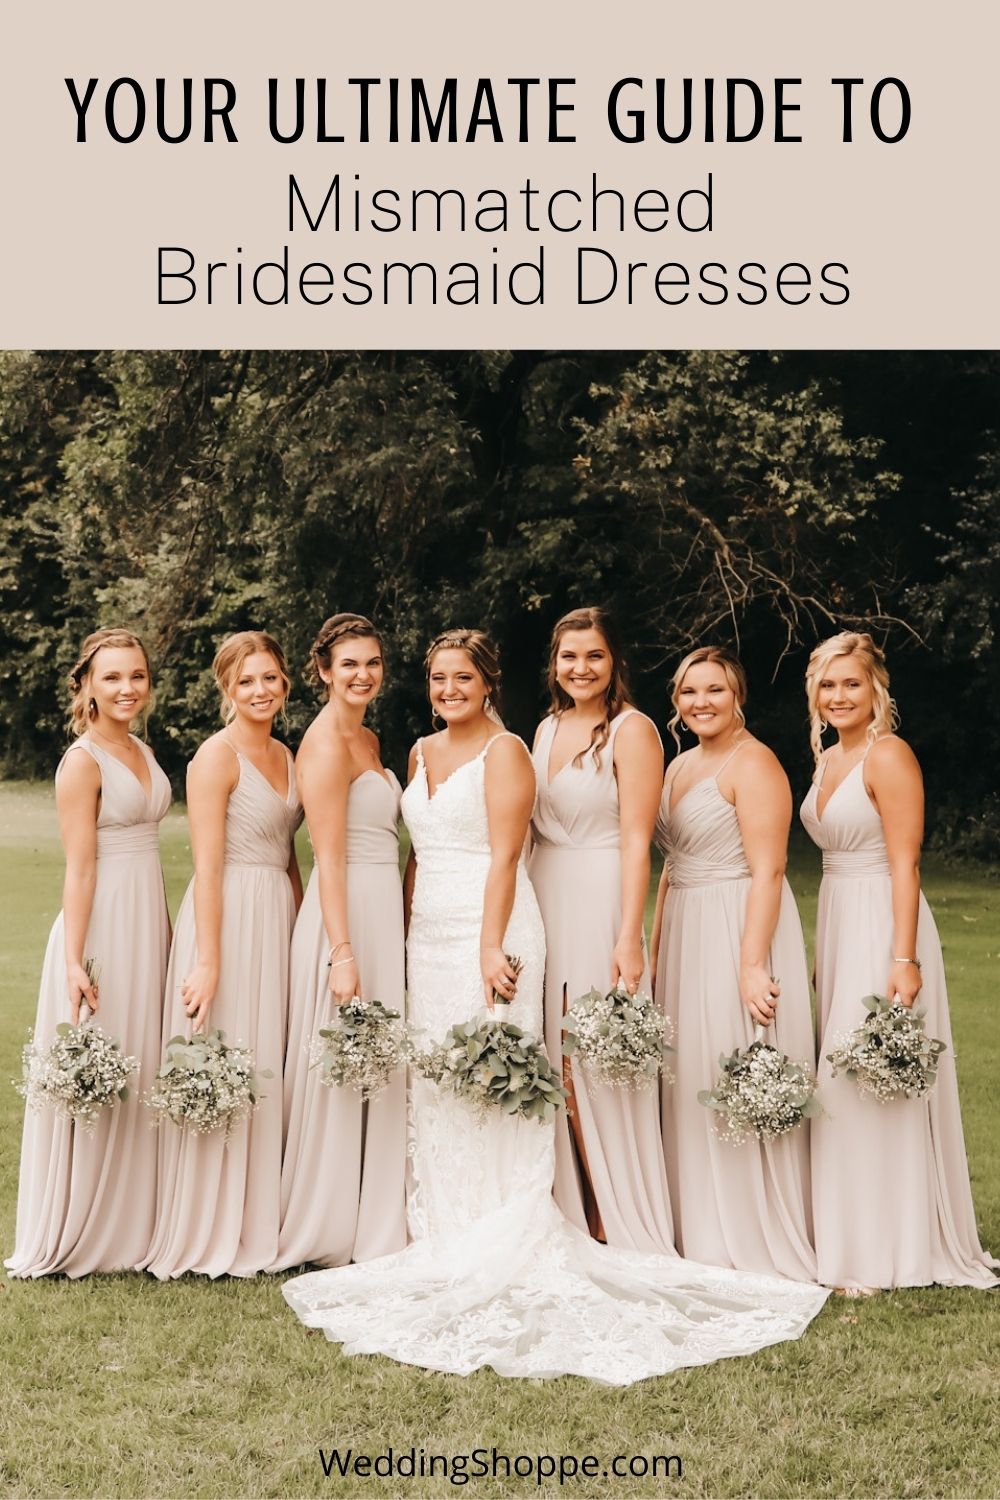 Best Convertible Bridesmaids Dresses: Top Multi-Way Dresses